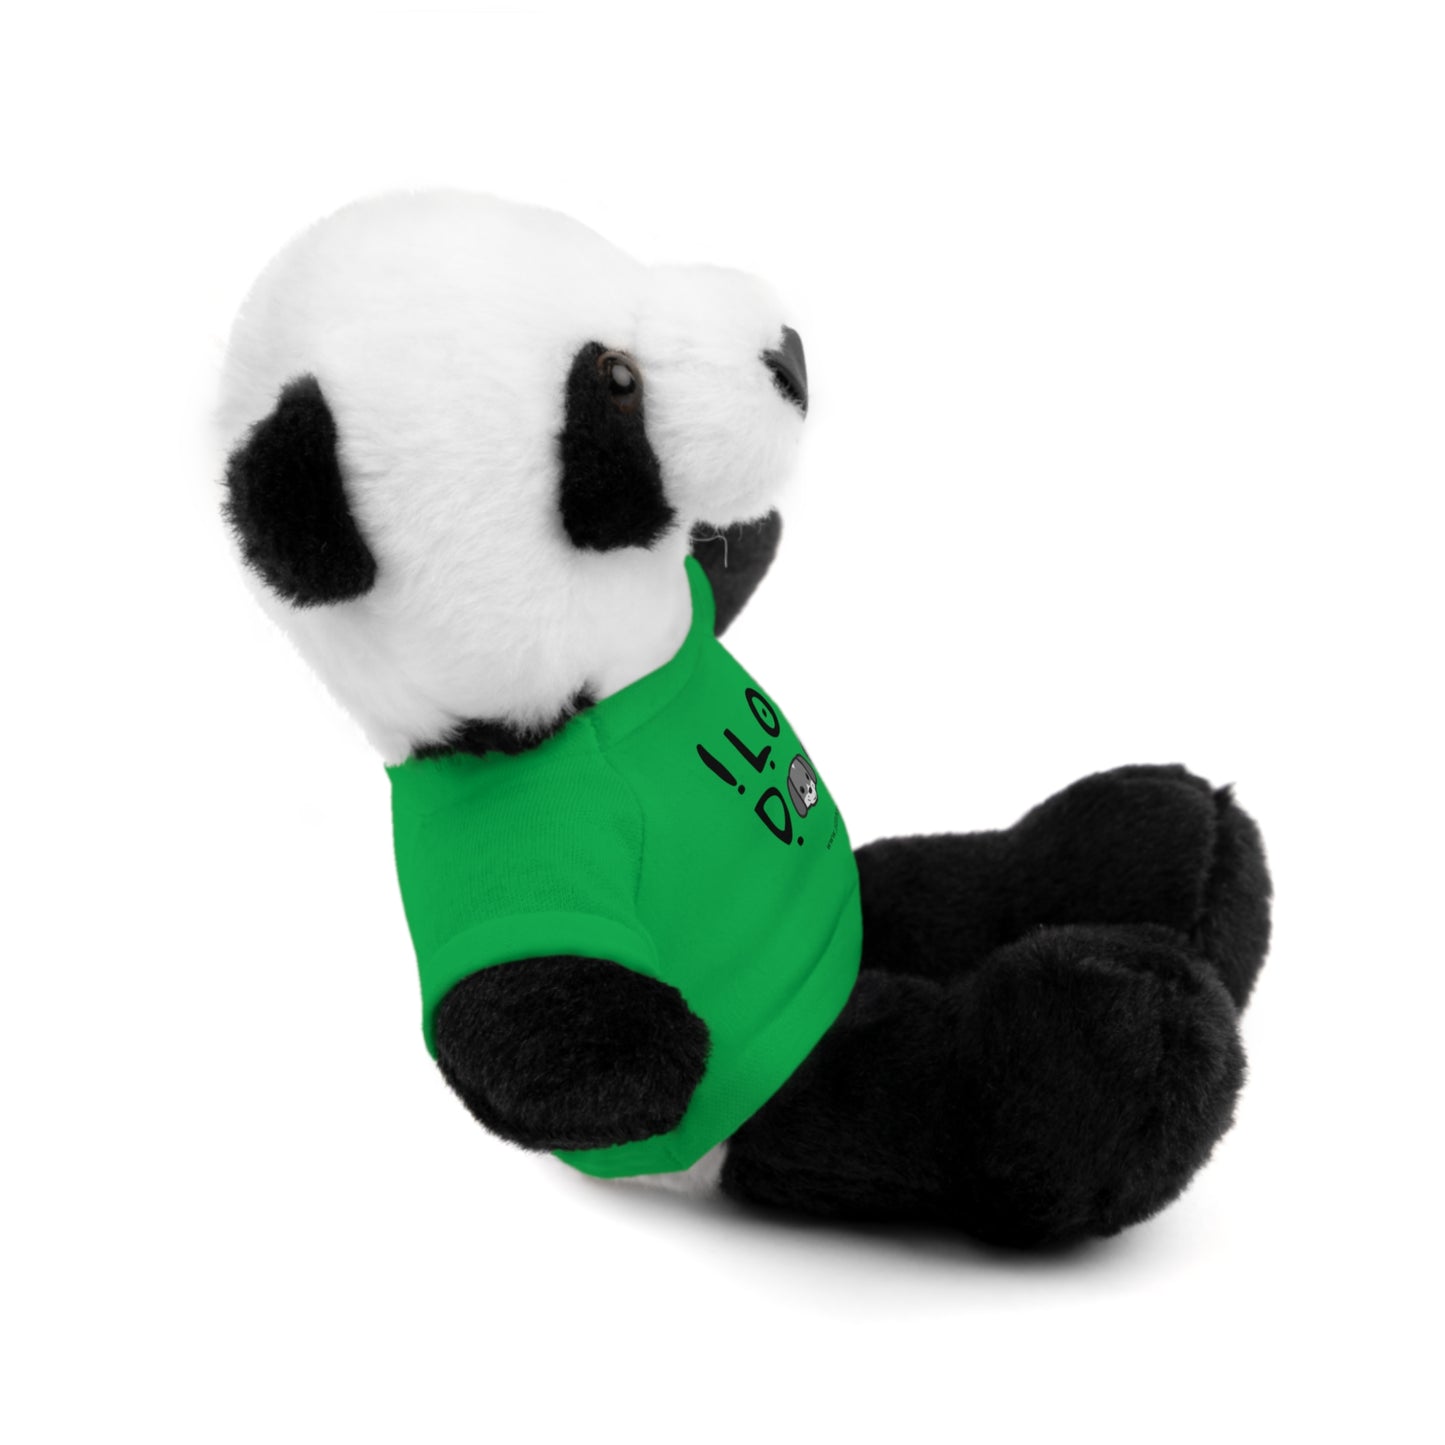 Stuffed Animals with Tee, I love Dogs, Available animals: Panda, Lion, Bear, Bunny, Jaguar, and Sheep